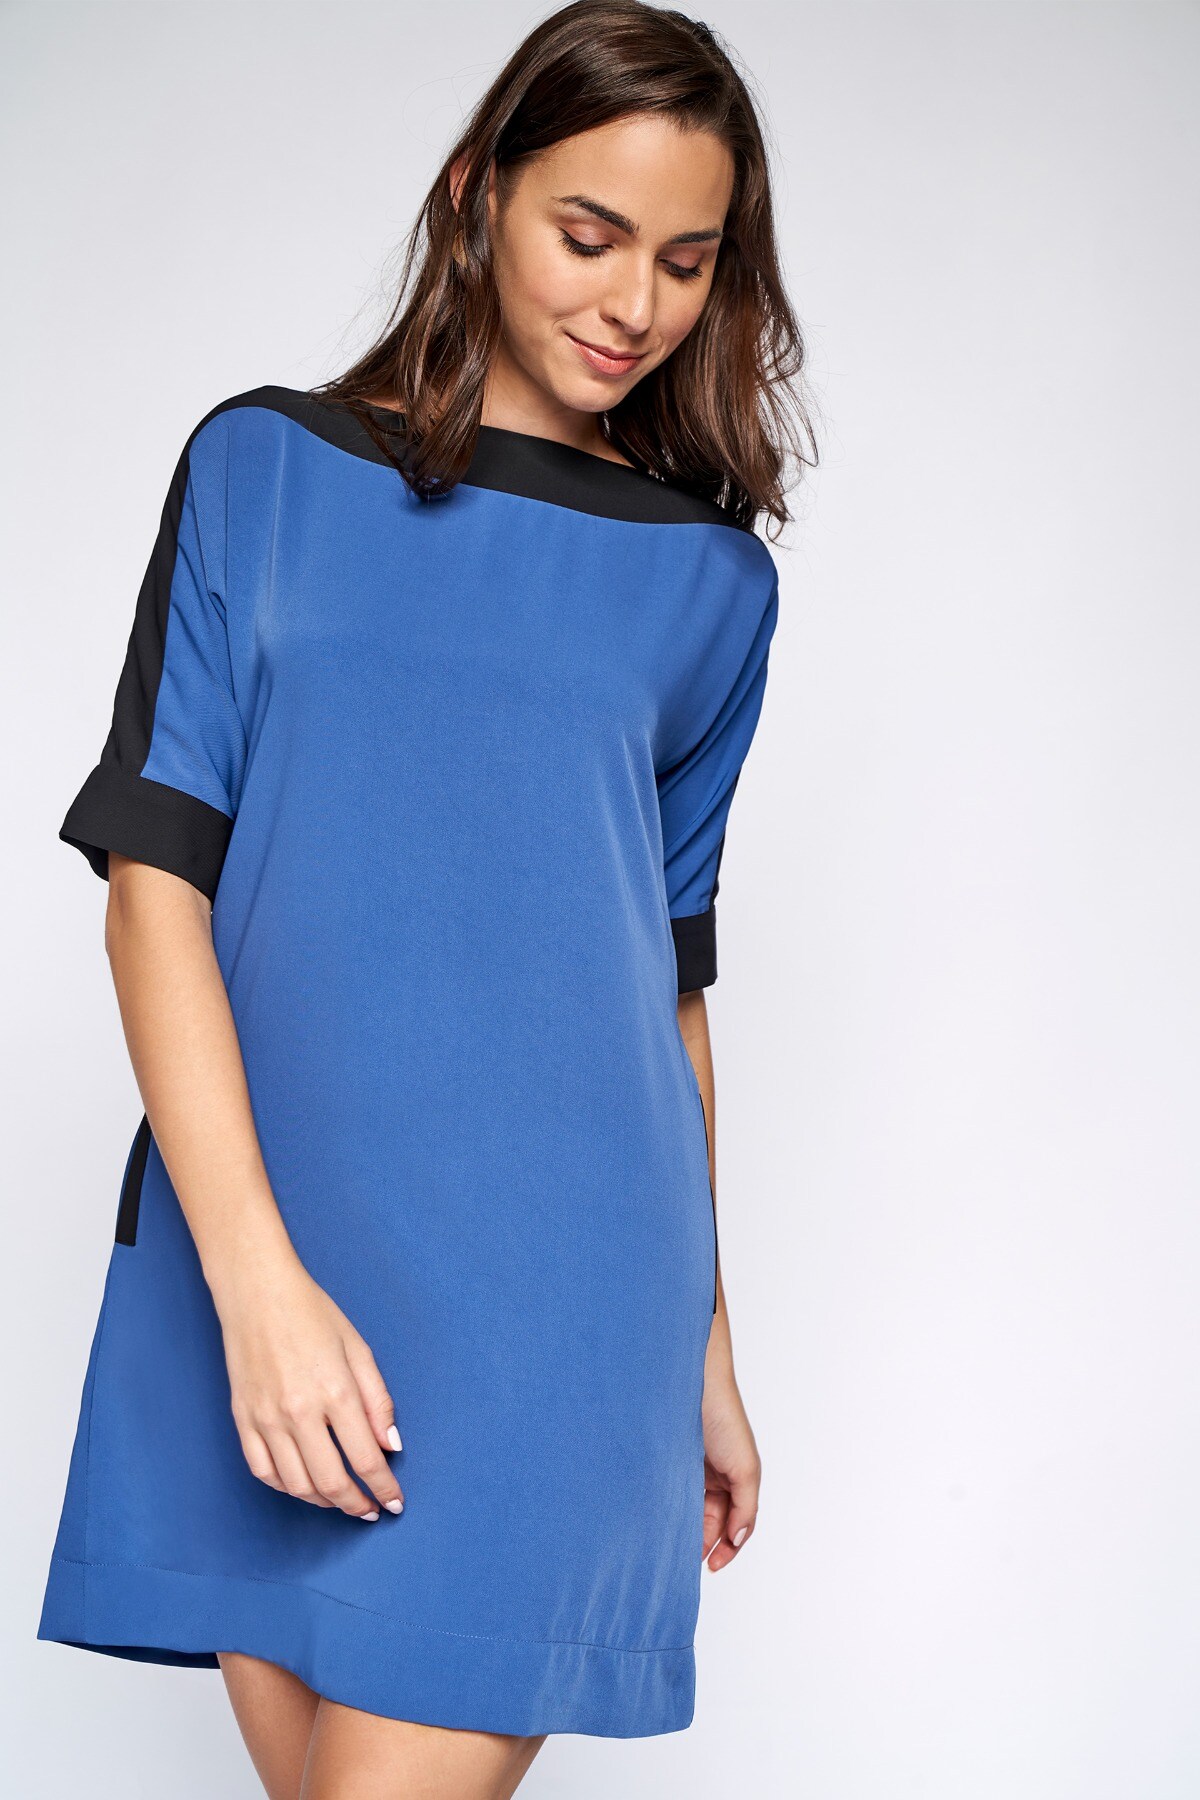 4 - Blue Colorblocked Dress, image 4